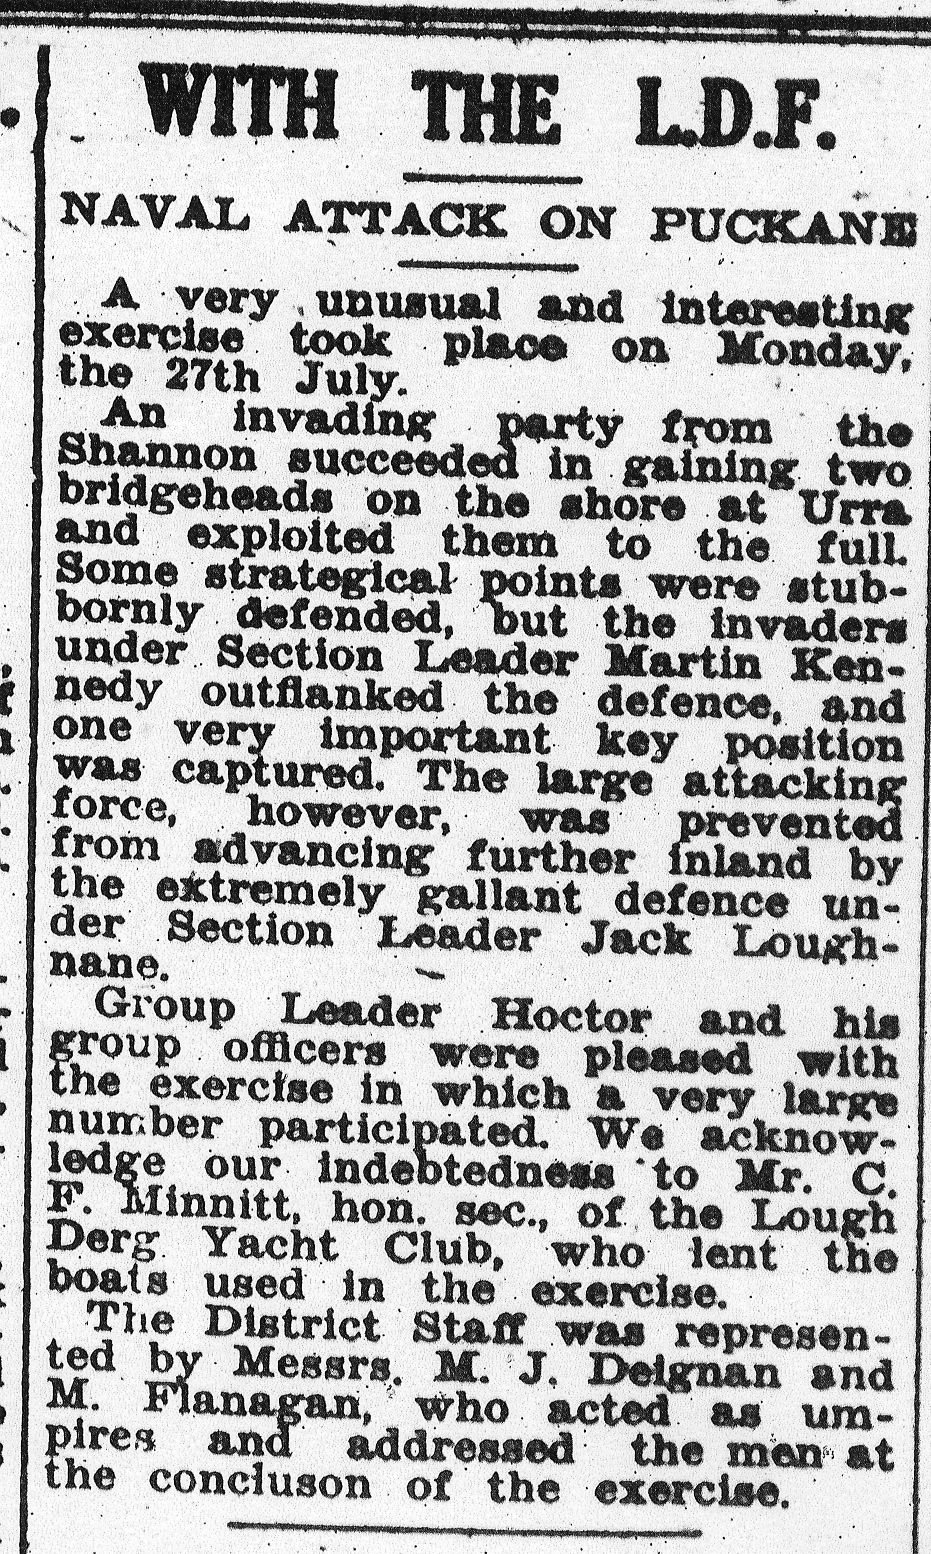 Nenagh Guardian 1 Aug 1942 LDF